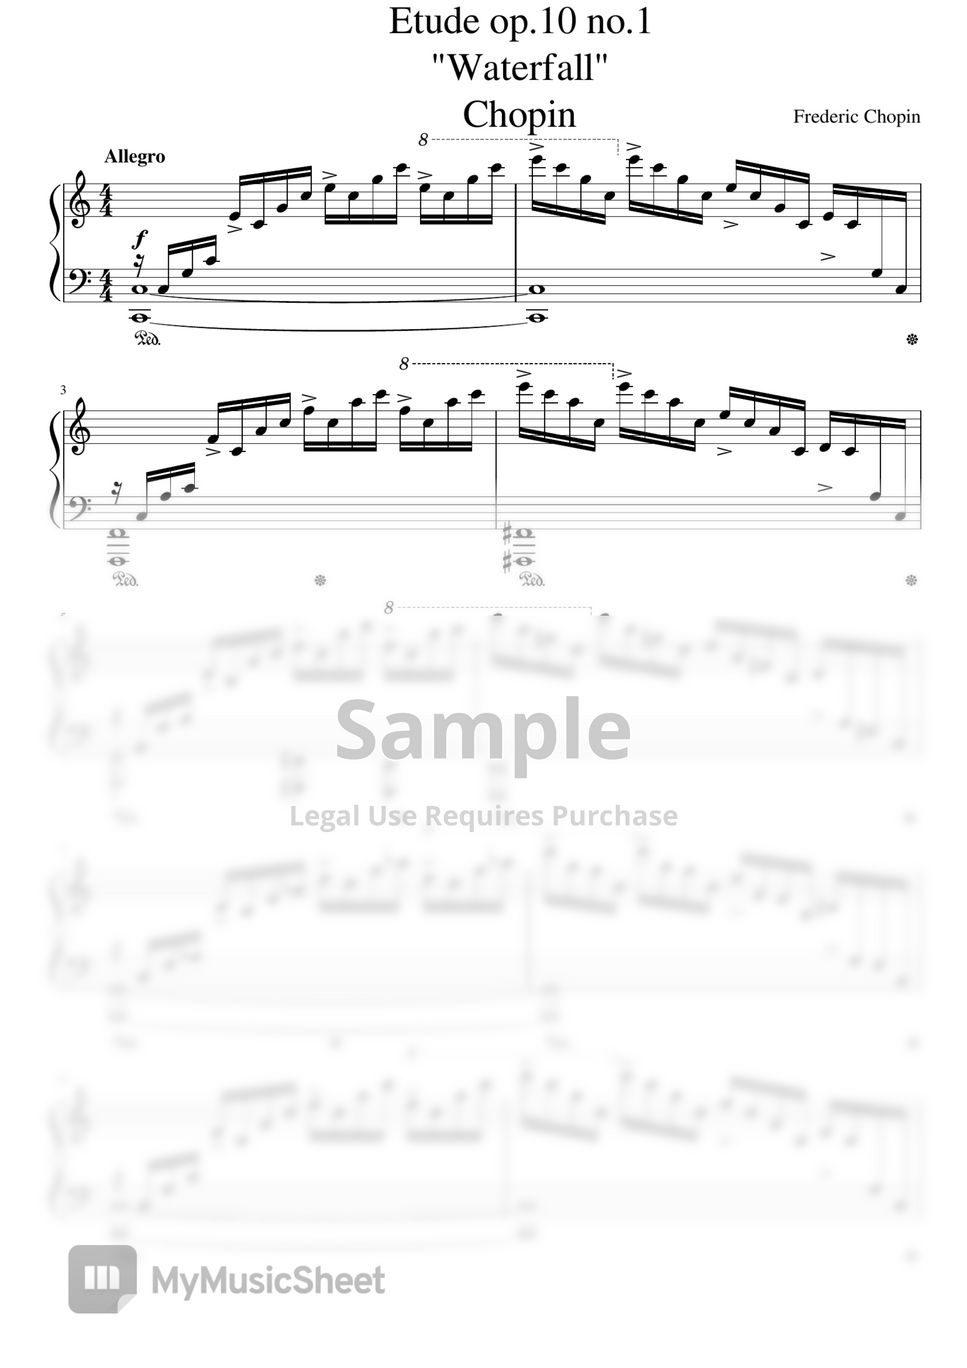 F. Chopin - Etude Op. 10 No. 1 (Waterfall) in C Major by F. Chopin